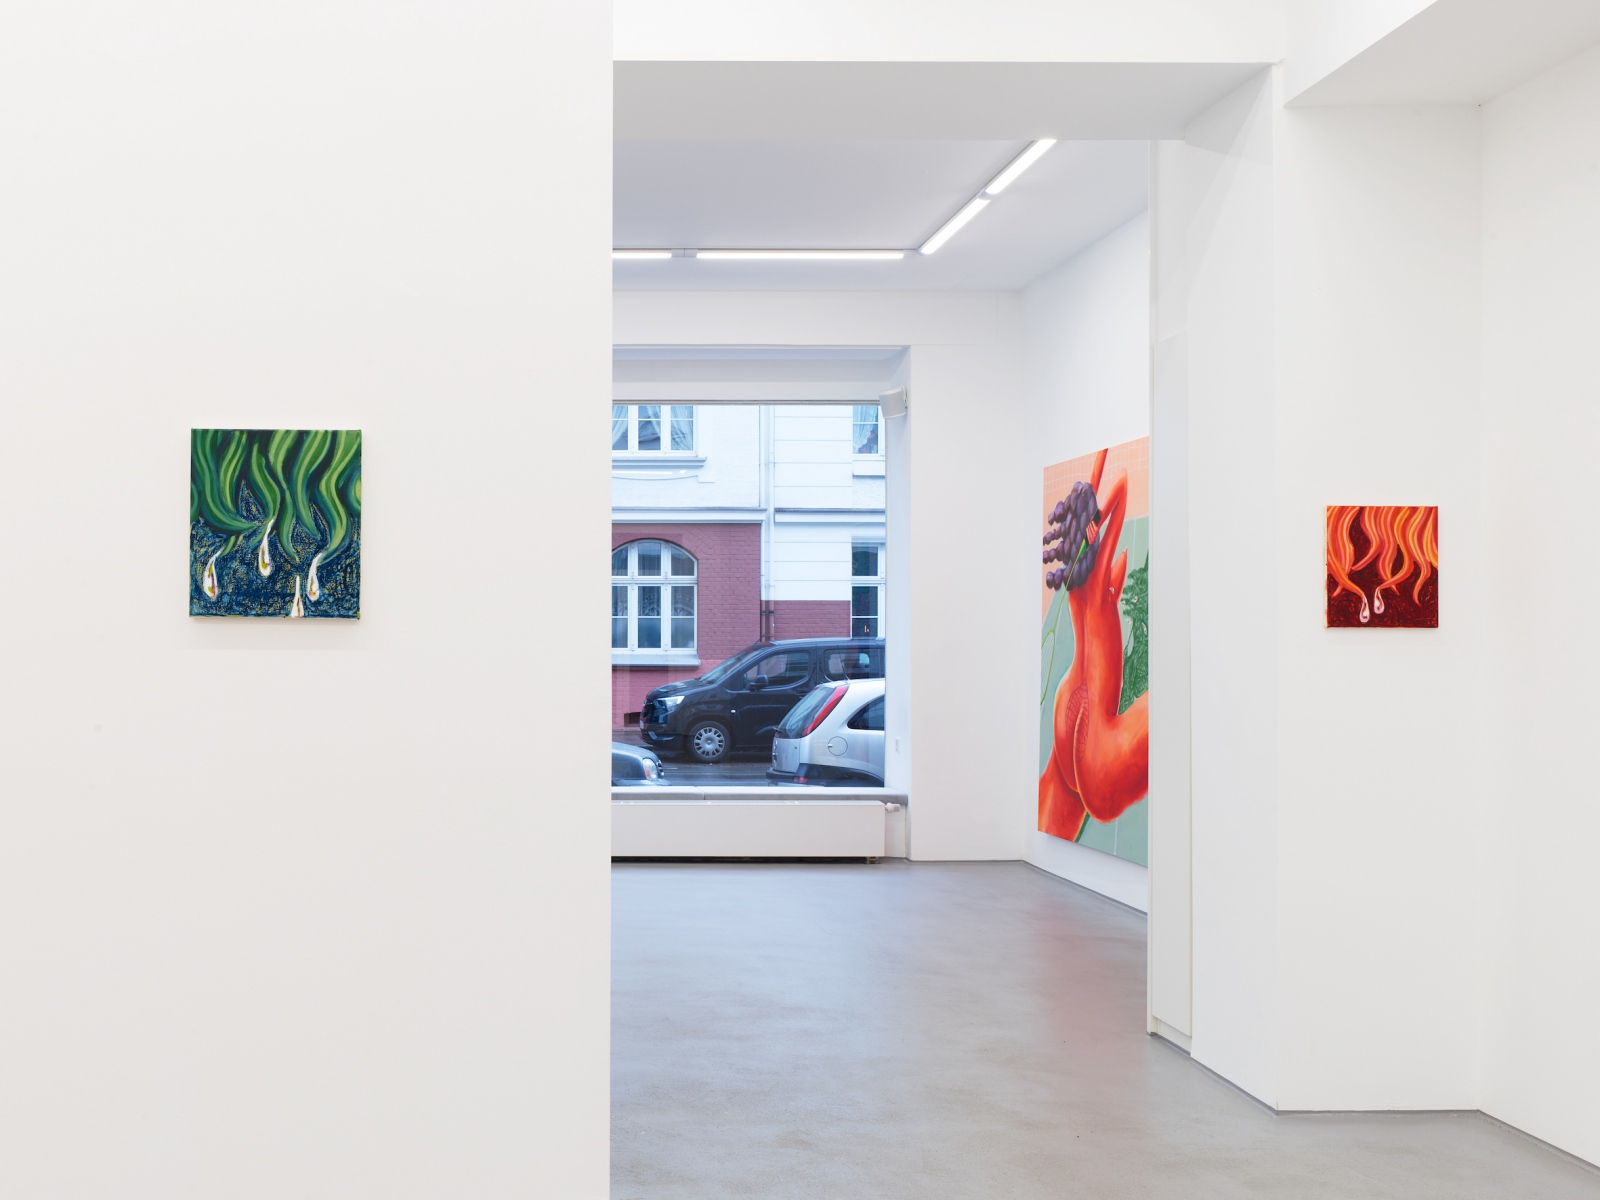 Tamara-Malcher-The-Living-Proof-2022-Galerie-Droste-Düsseldorf-Installation-view-10